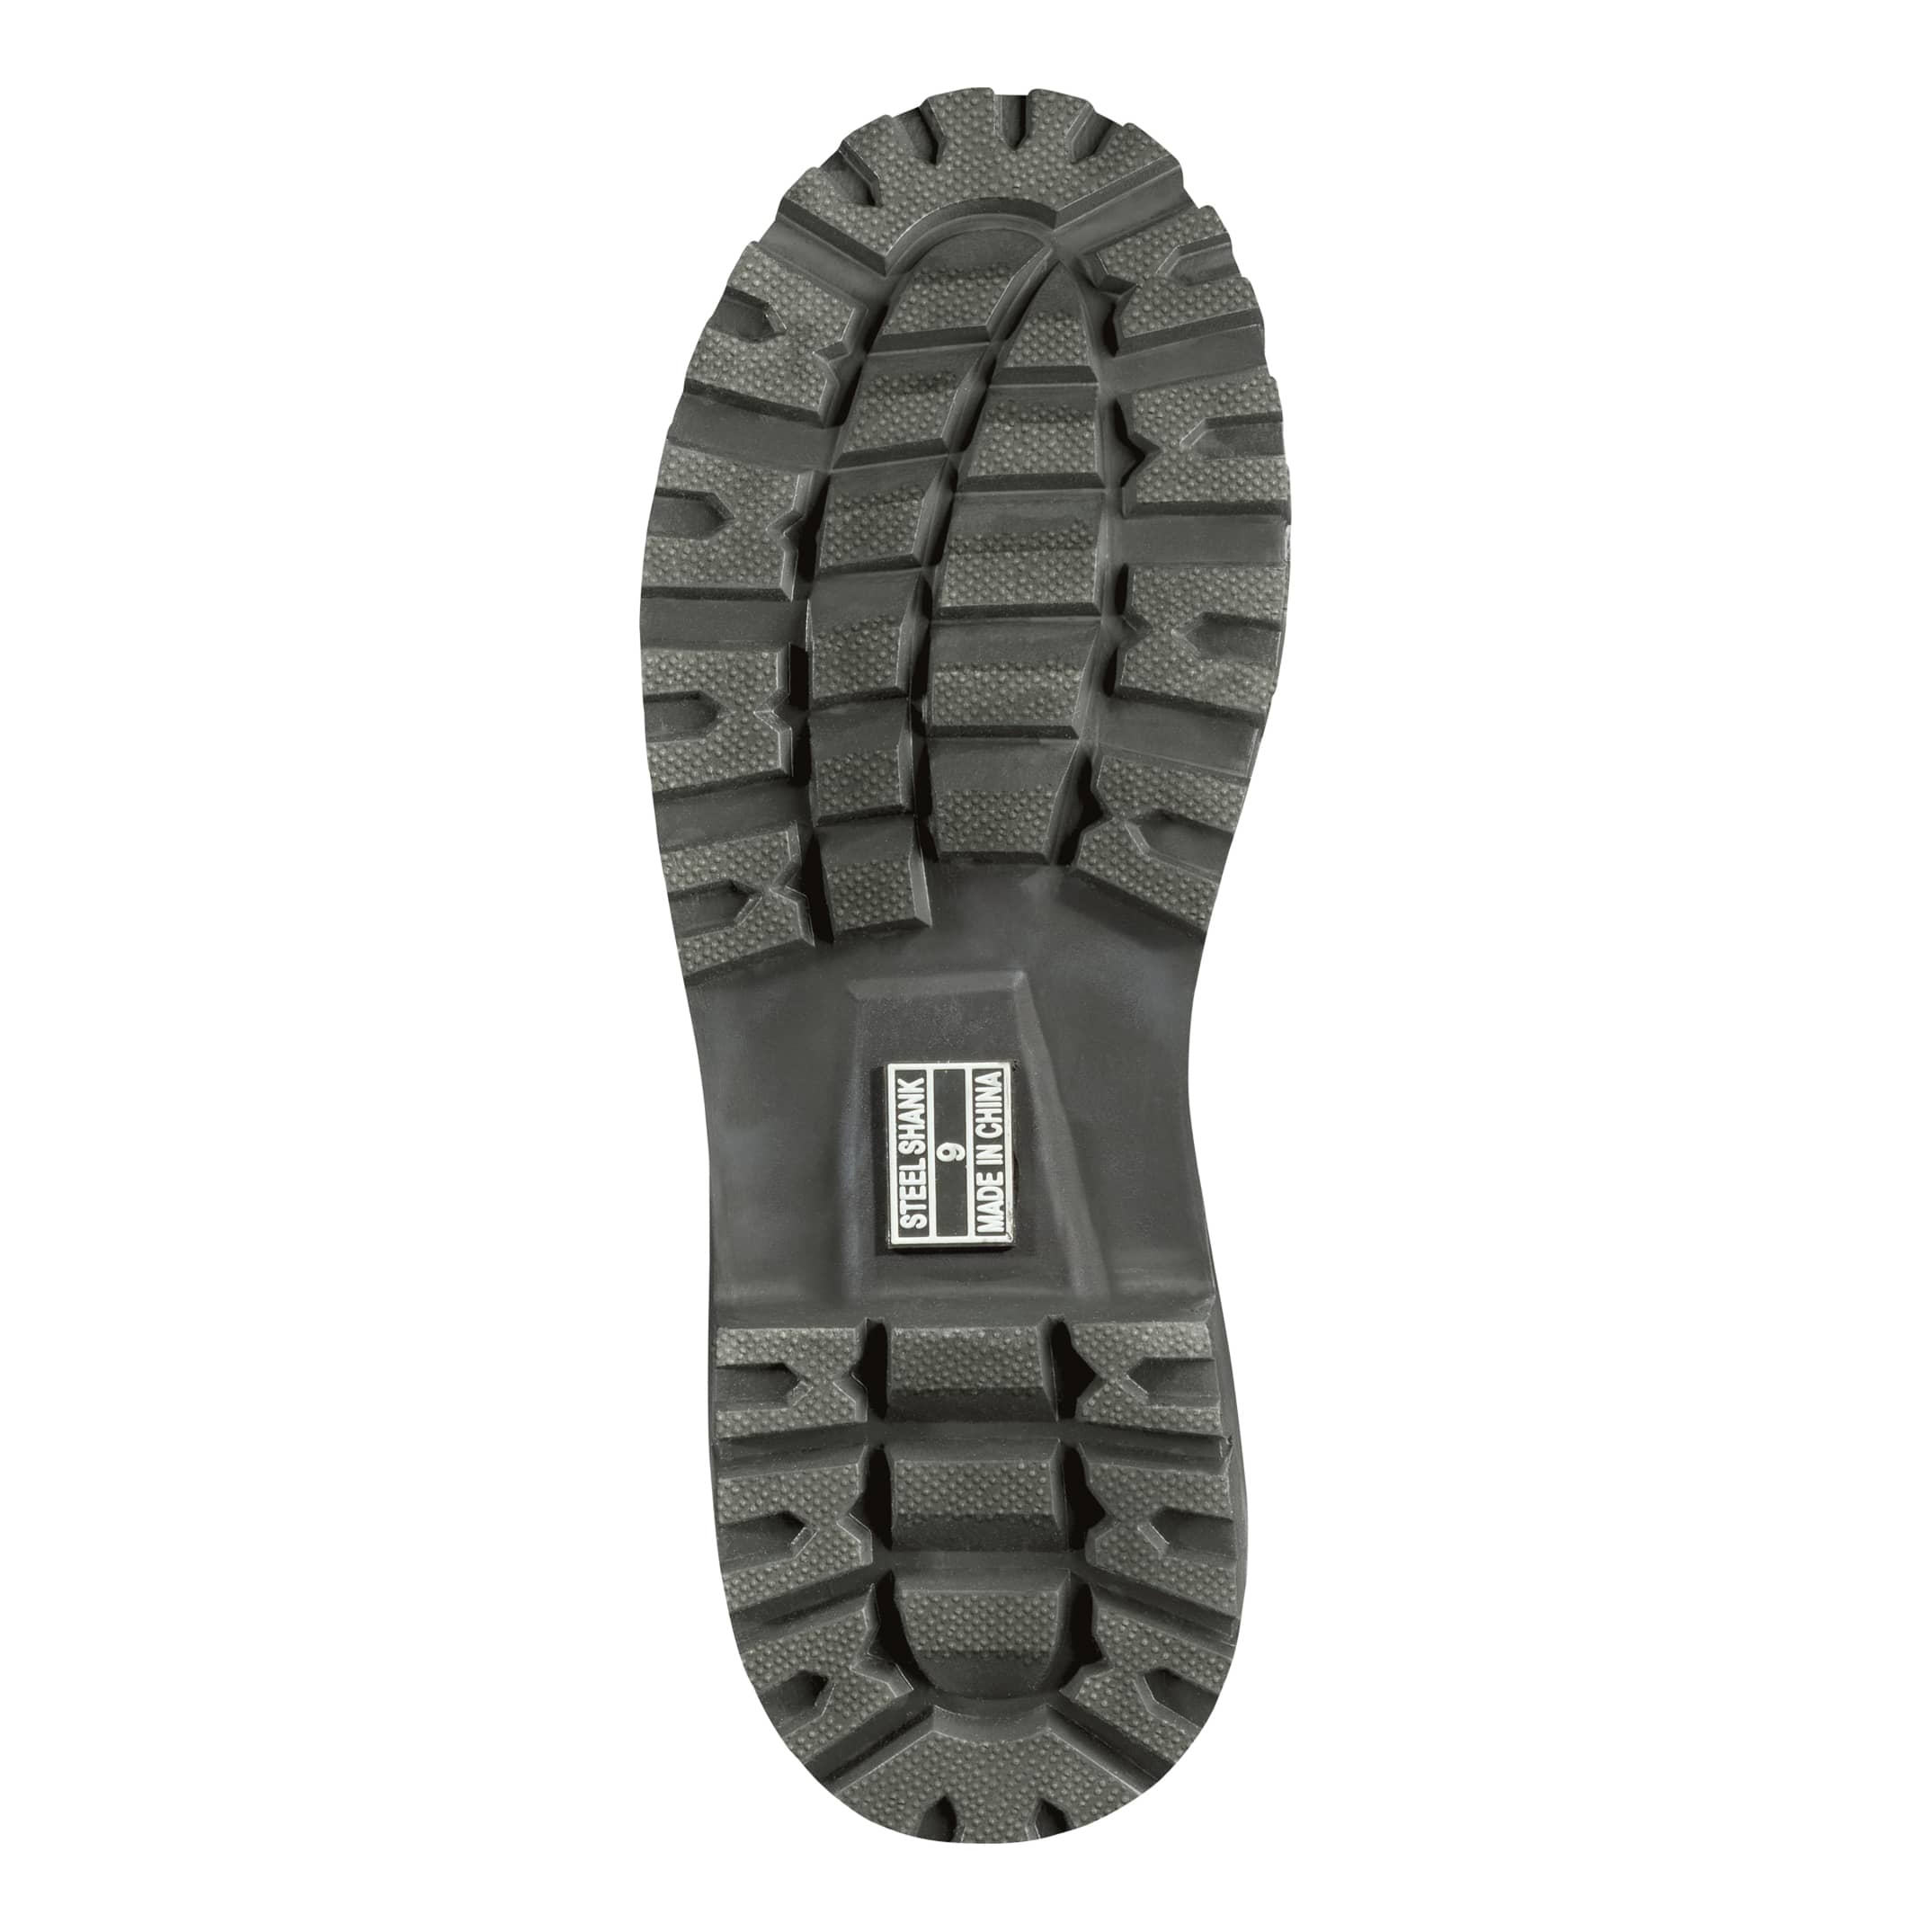 RedHead® Men’s Camo Utility Rubber Boots - sole